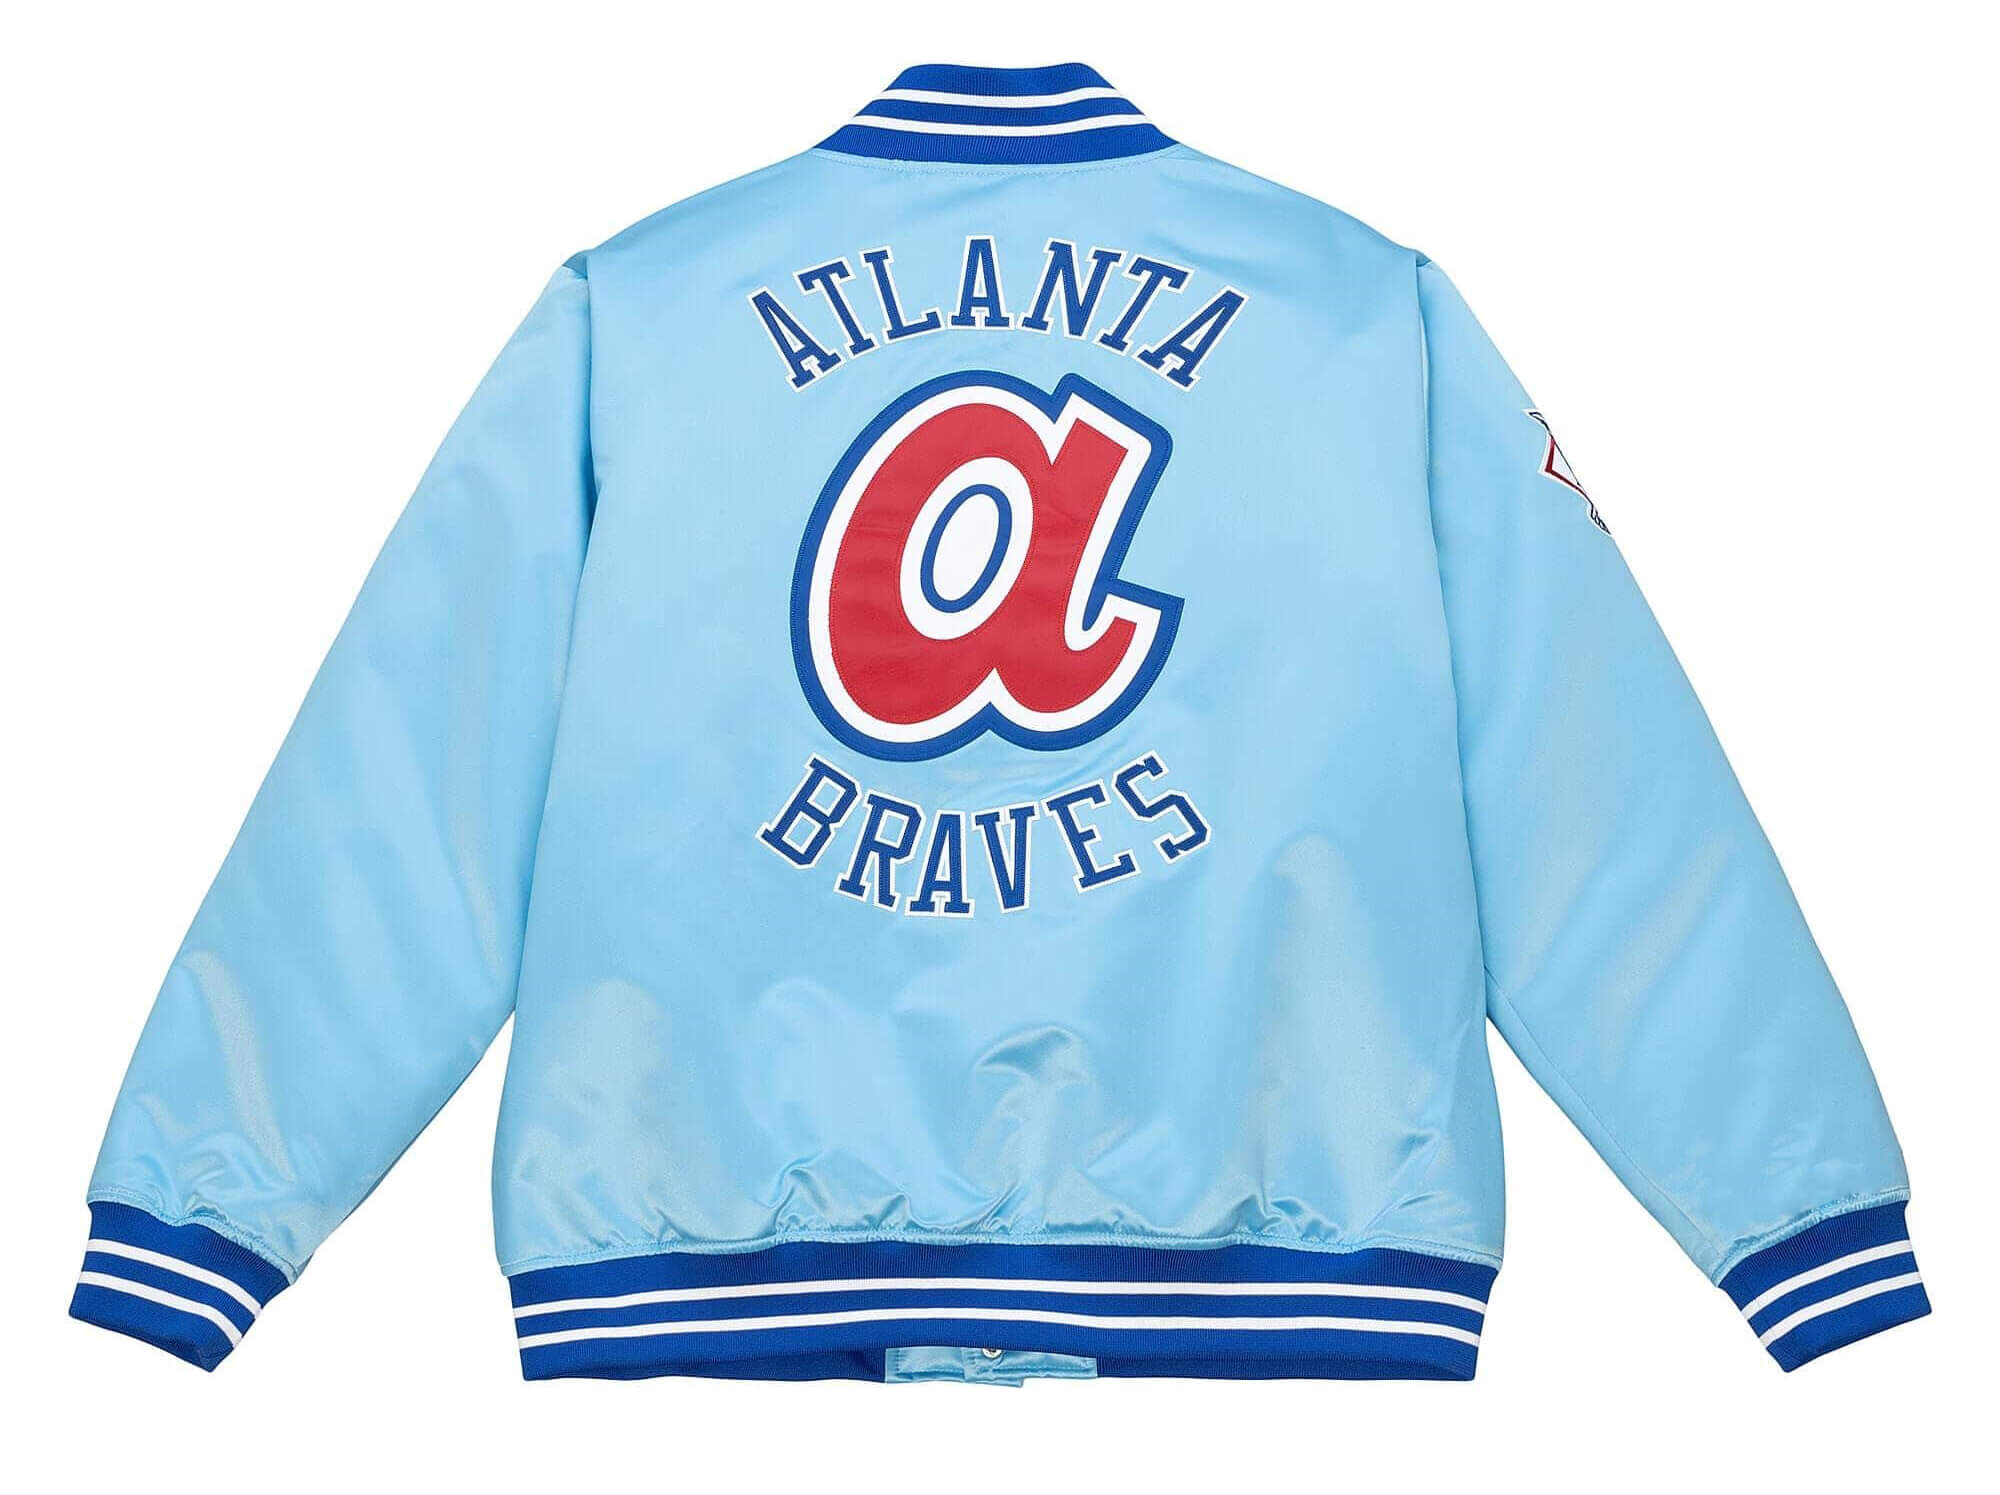 Atlanta Braves Sweatshirt with arm details